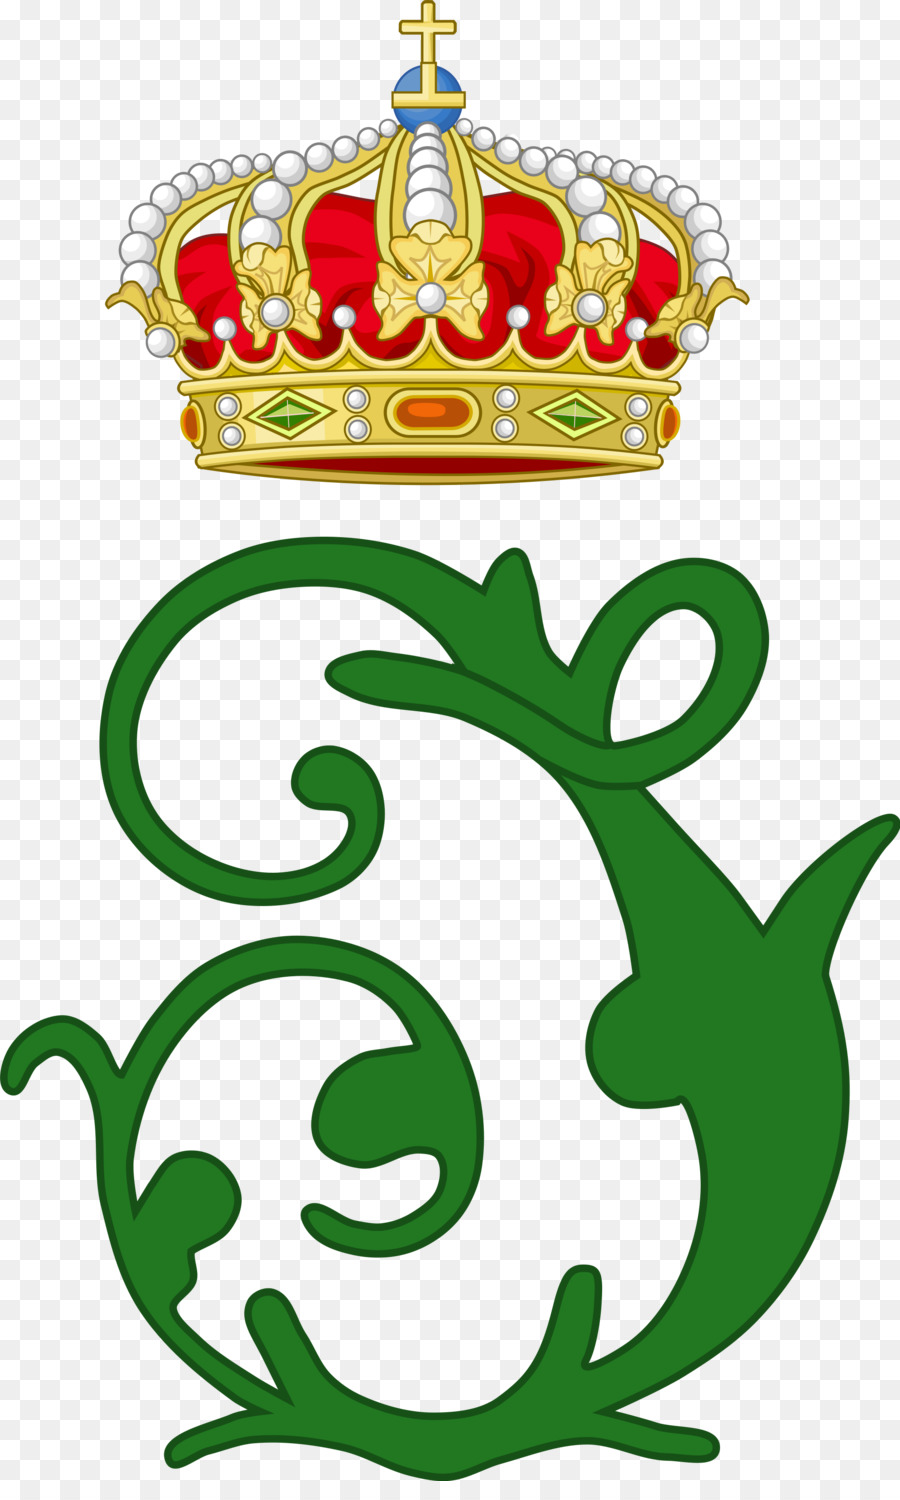 Royal cypher Principe monarca Famiglia reale britannica Anhalt-Bernburg - Sassonia